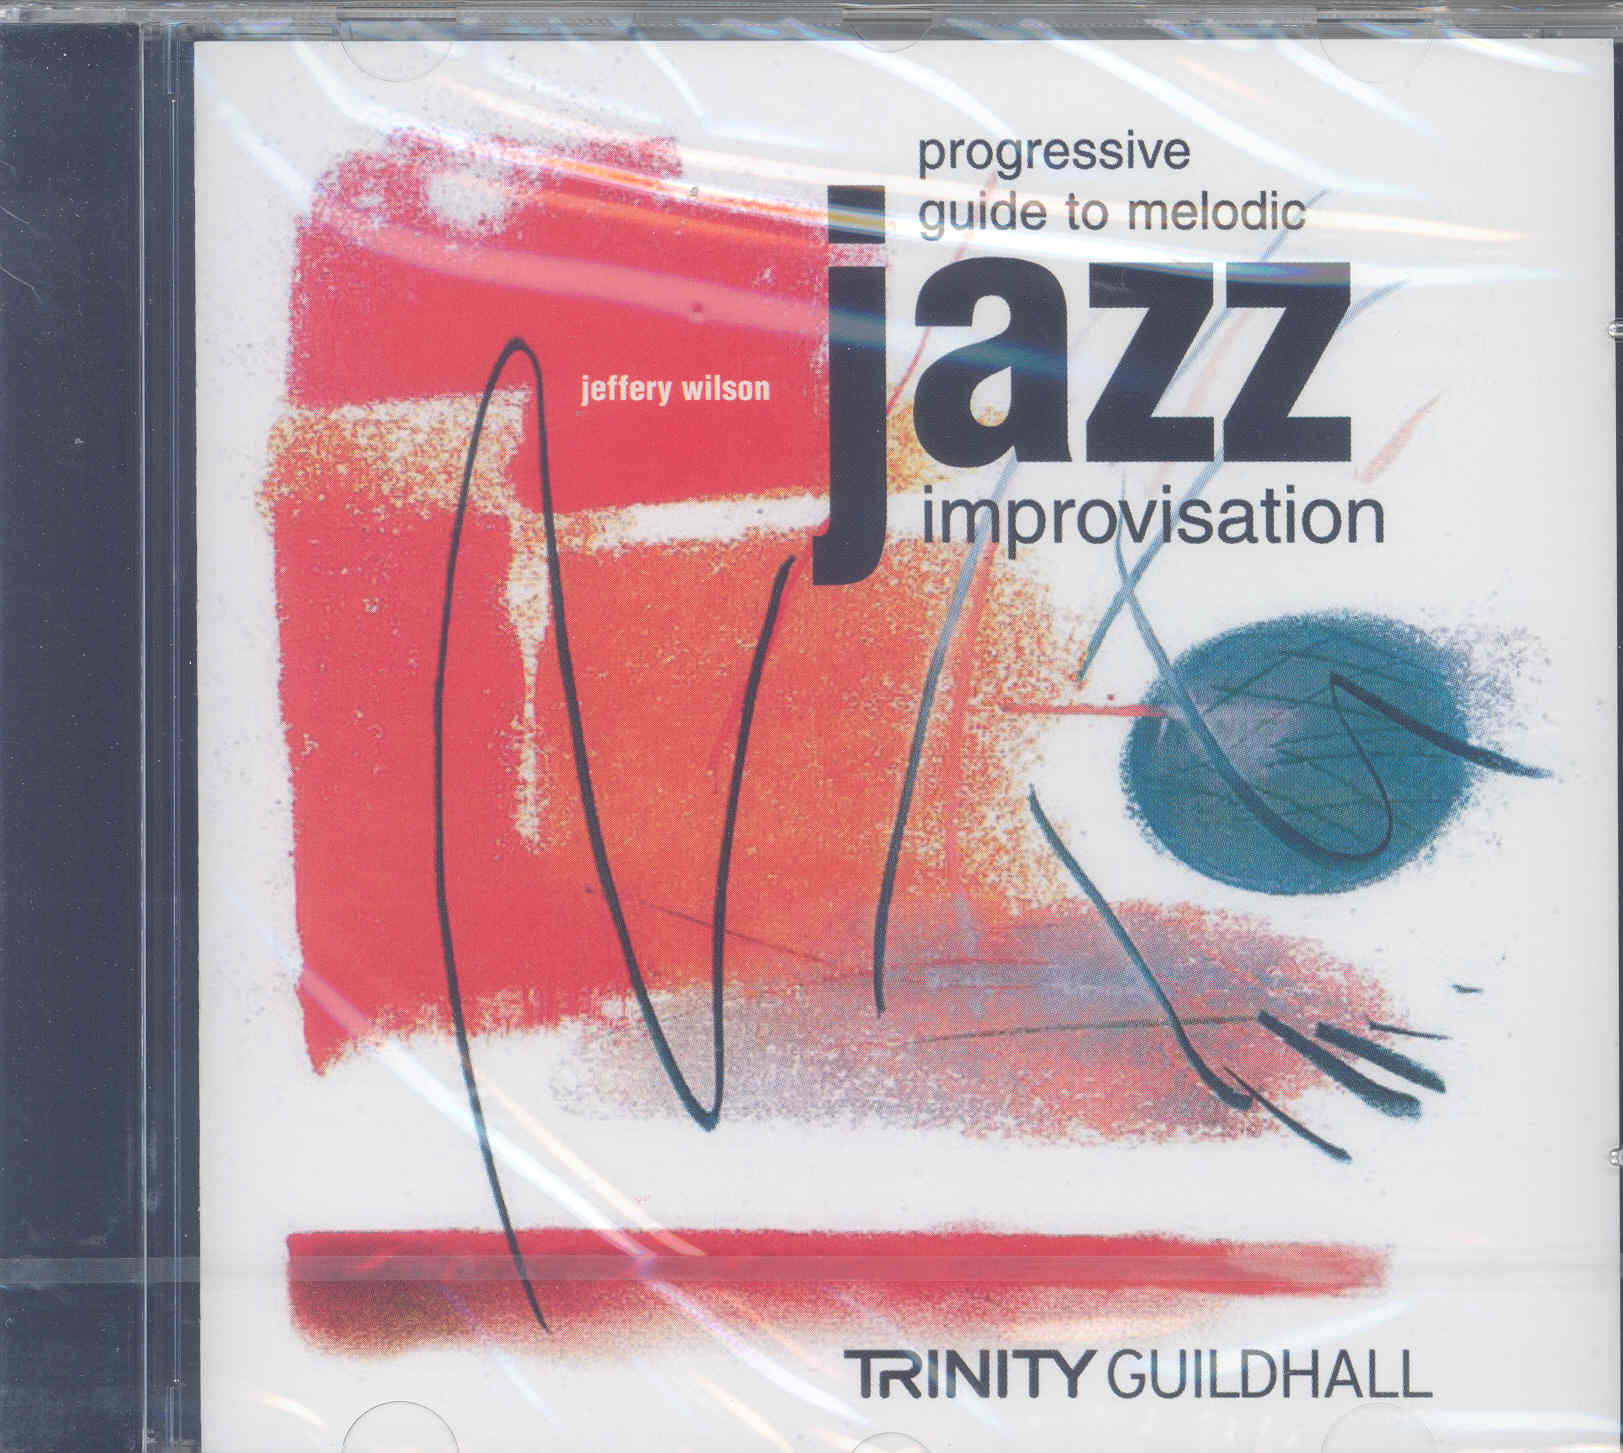 Progressive Guide To Melodic Jazz Improvisation Cd Sheet Music Songbook